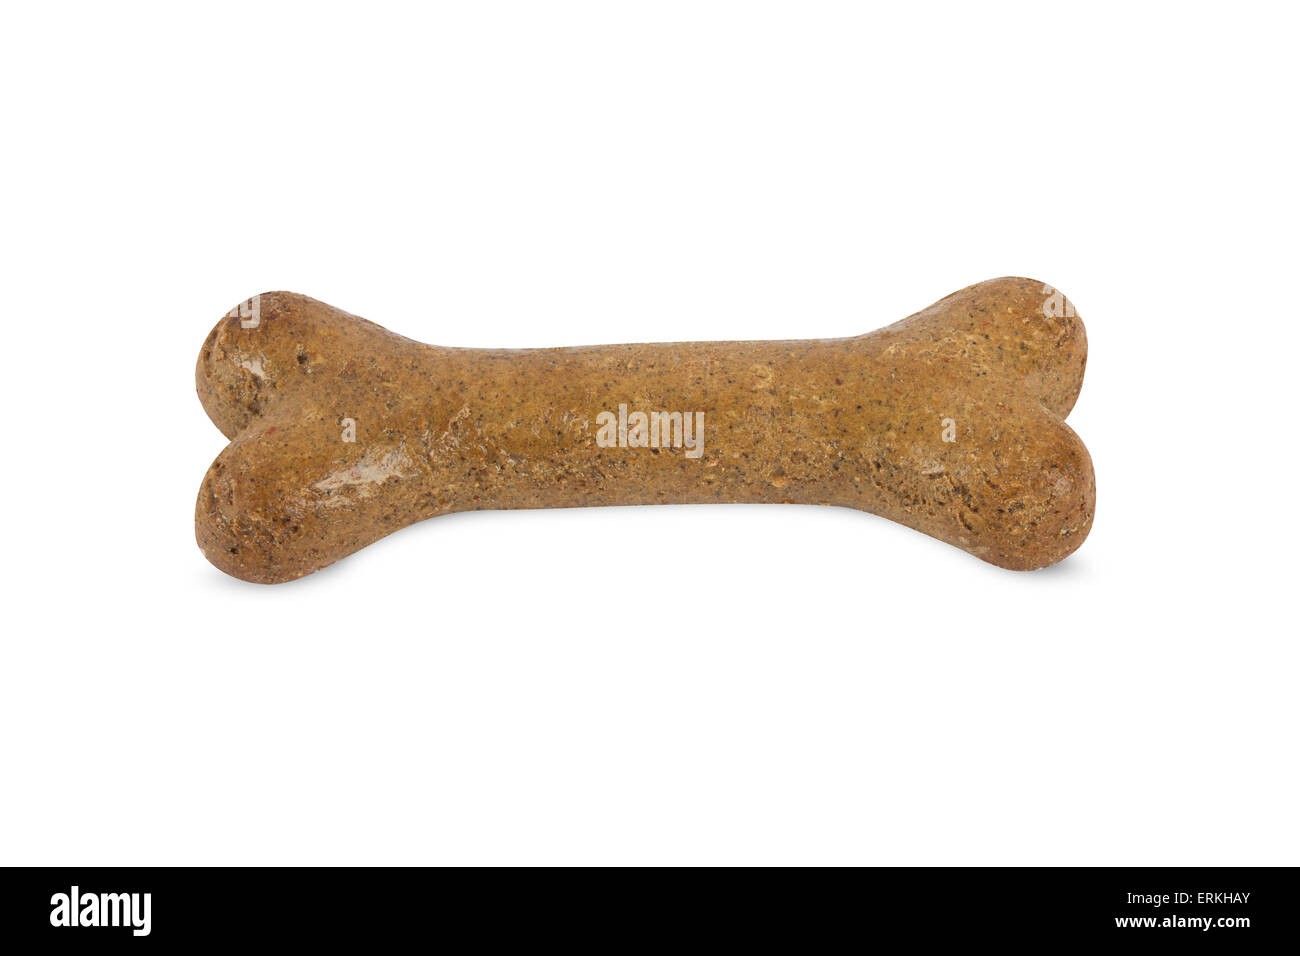 Close up view of single dog food bone treat, isolated on white background. Stock Photo